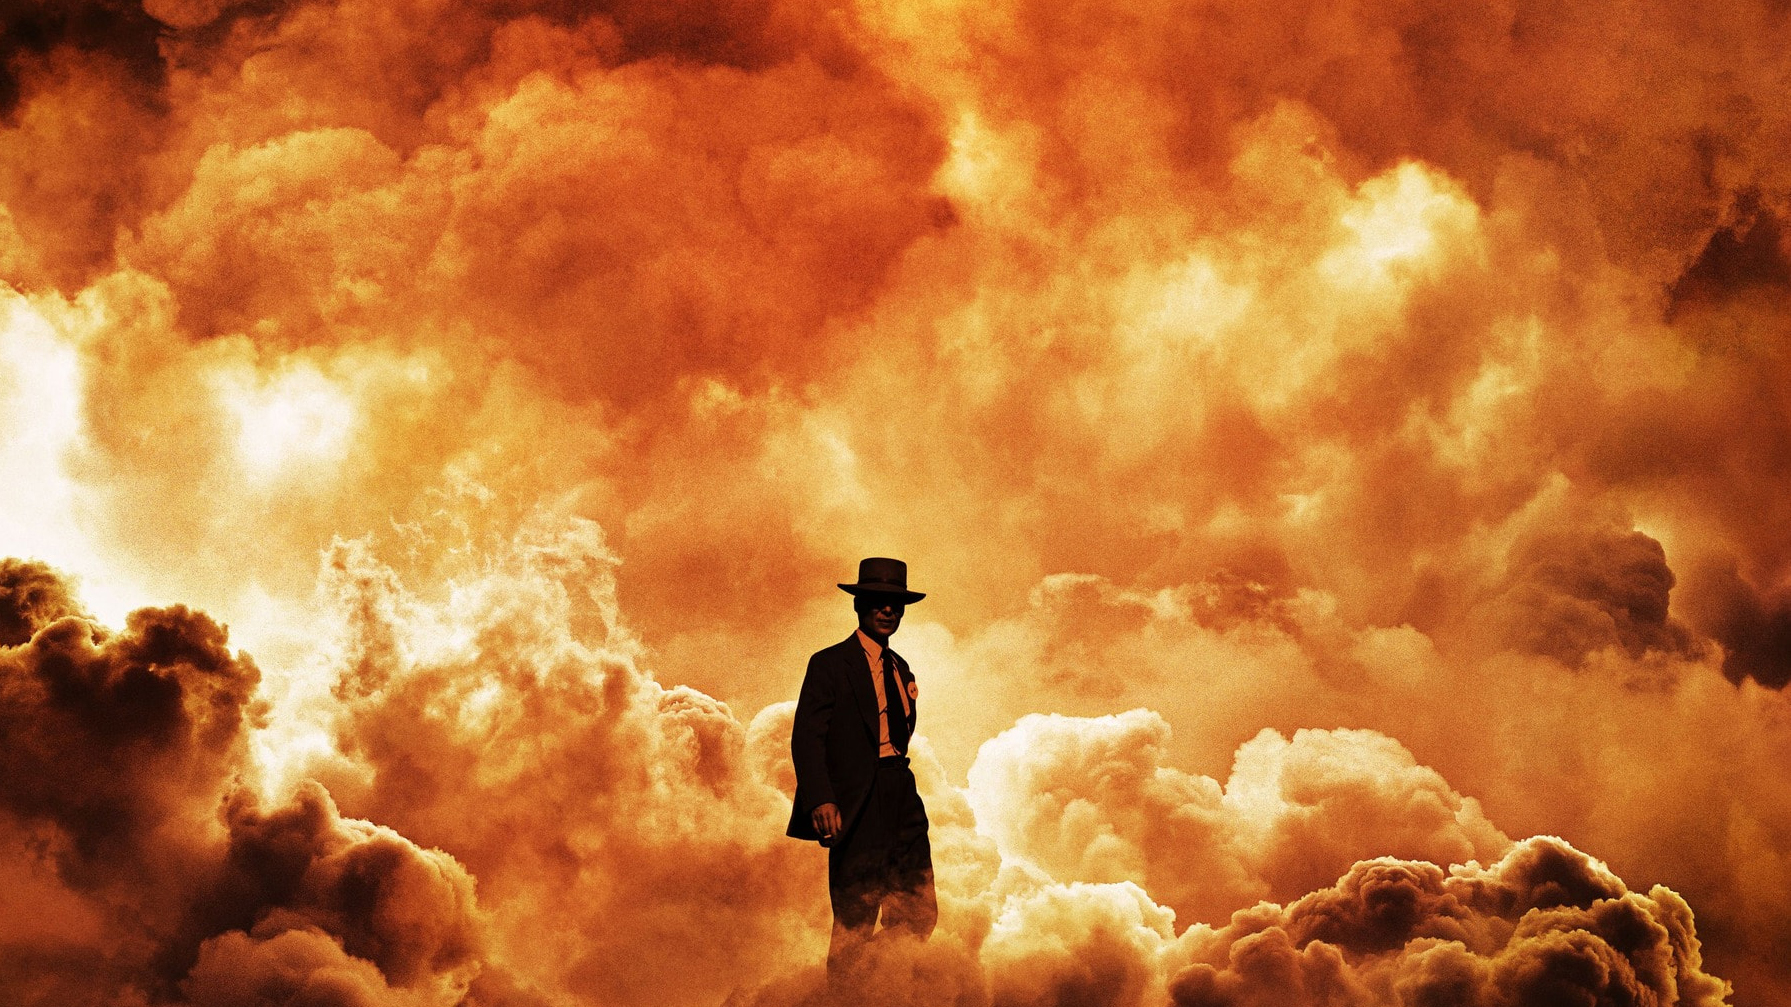 Oppenheimer film scene with smoky background